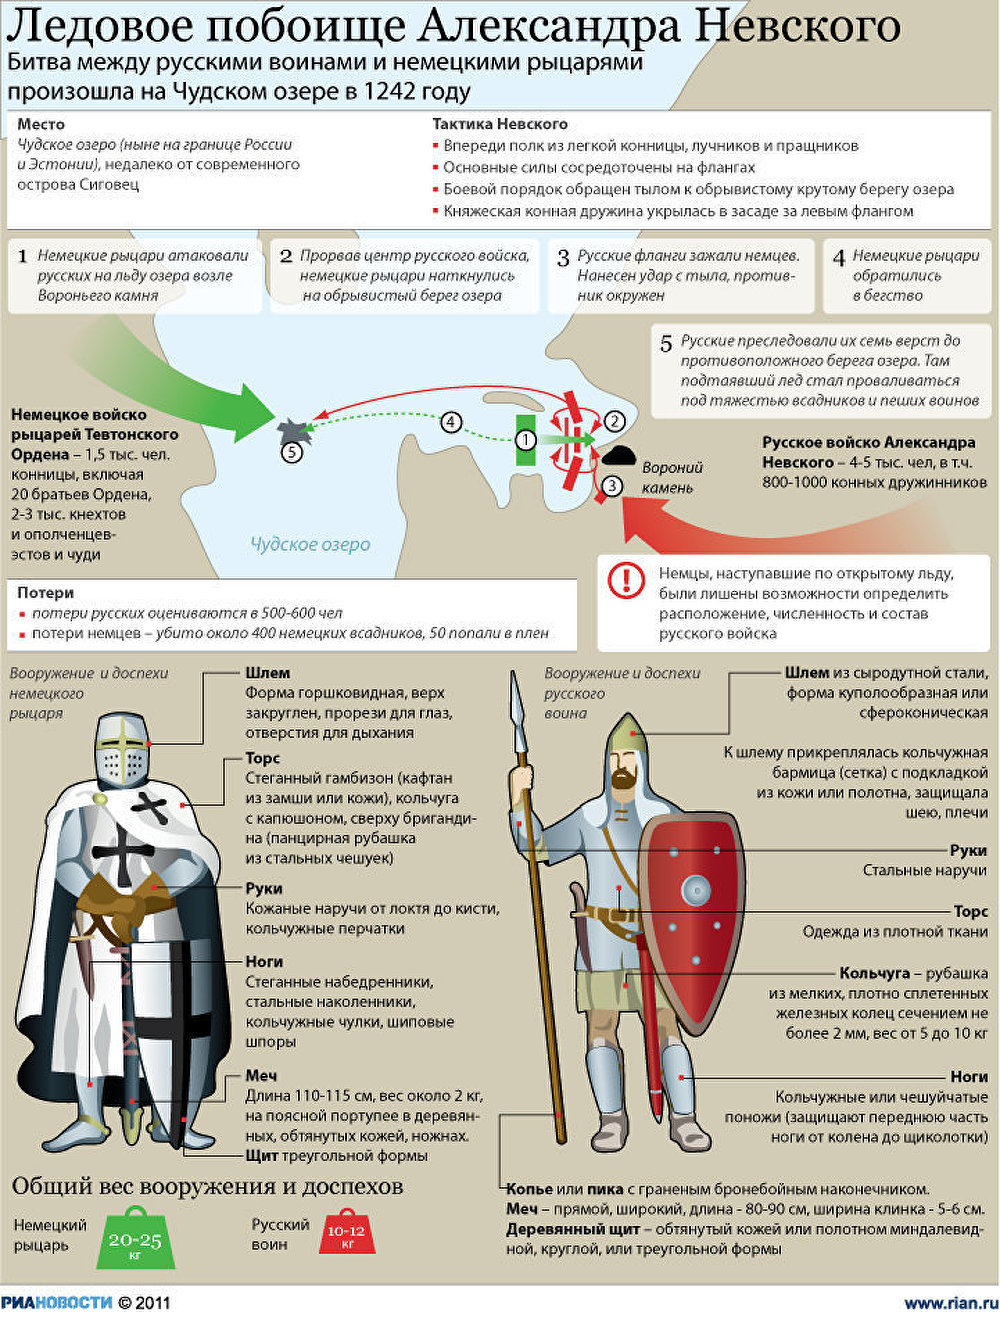 Александр Невский инфографика